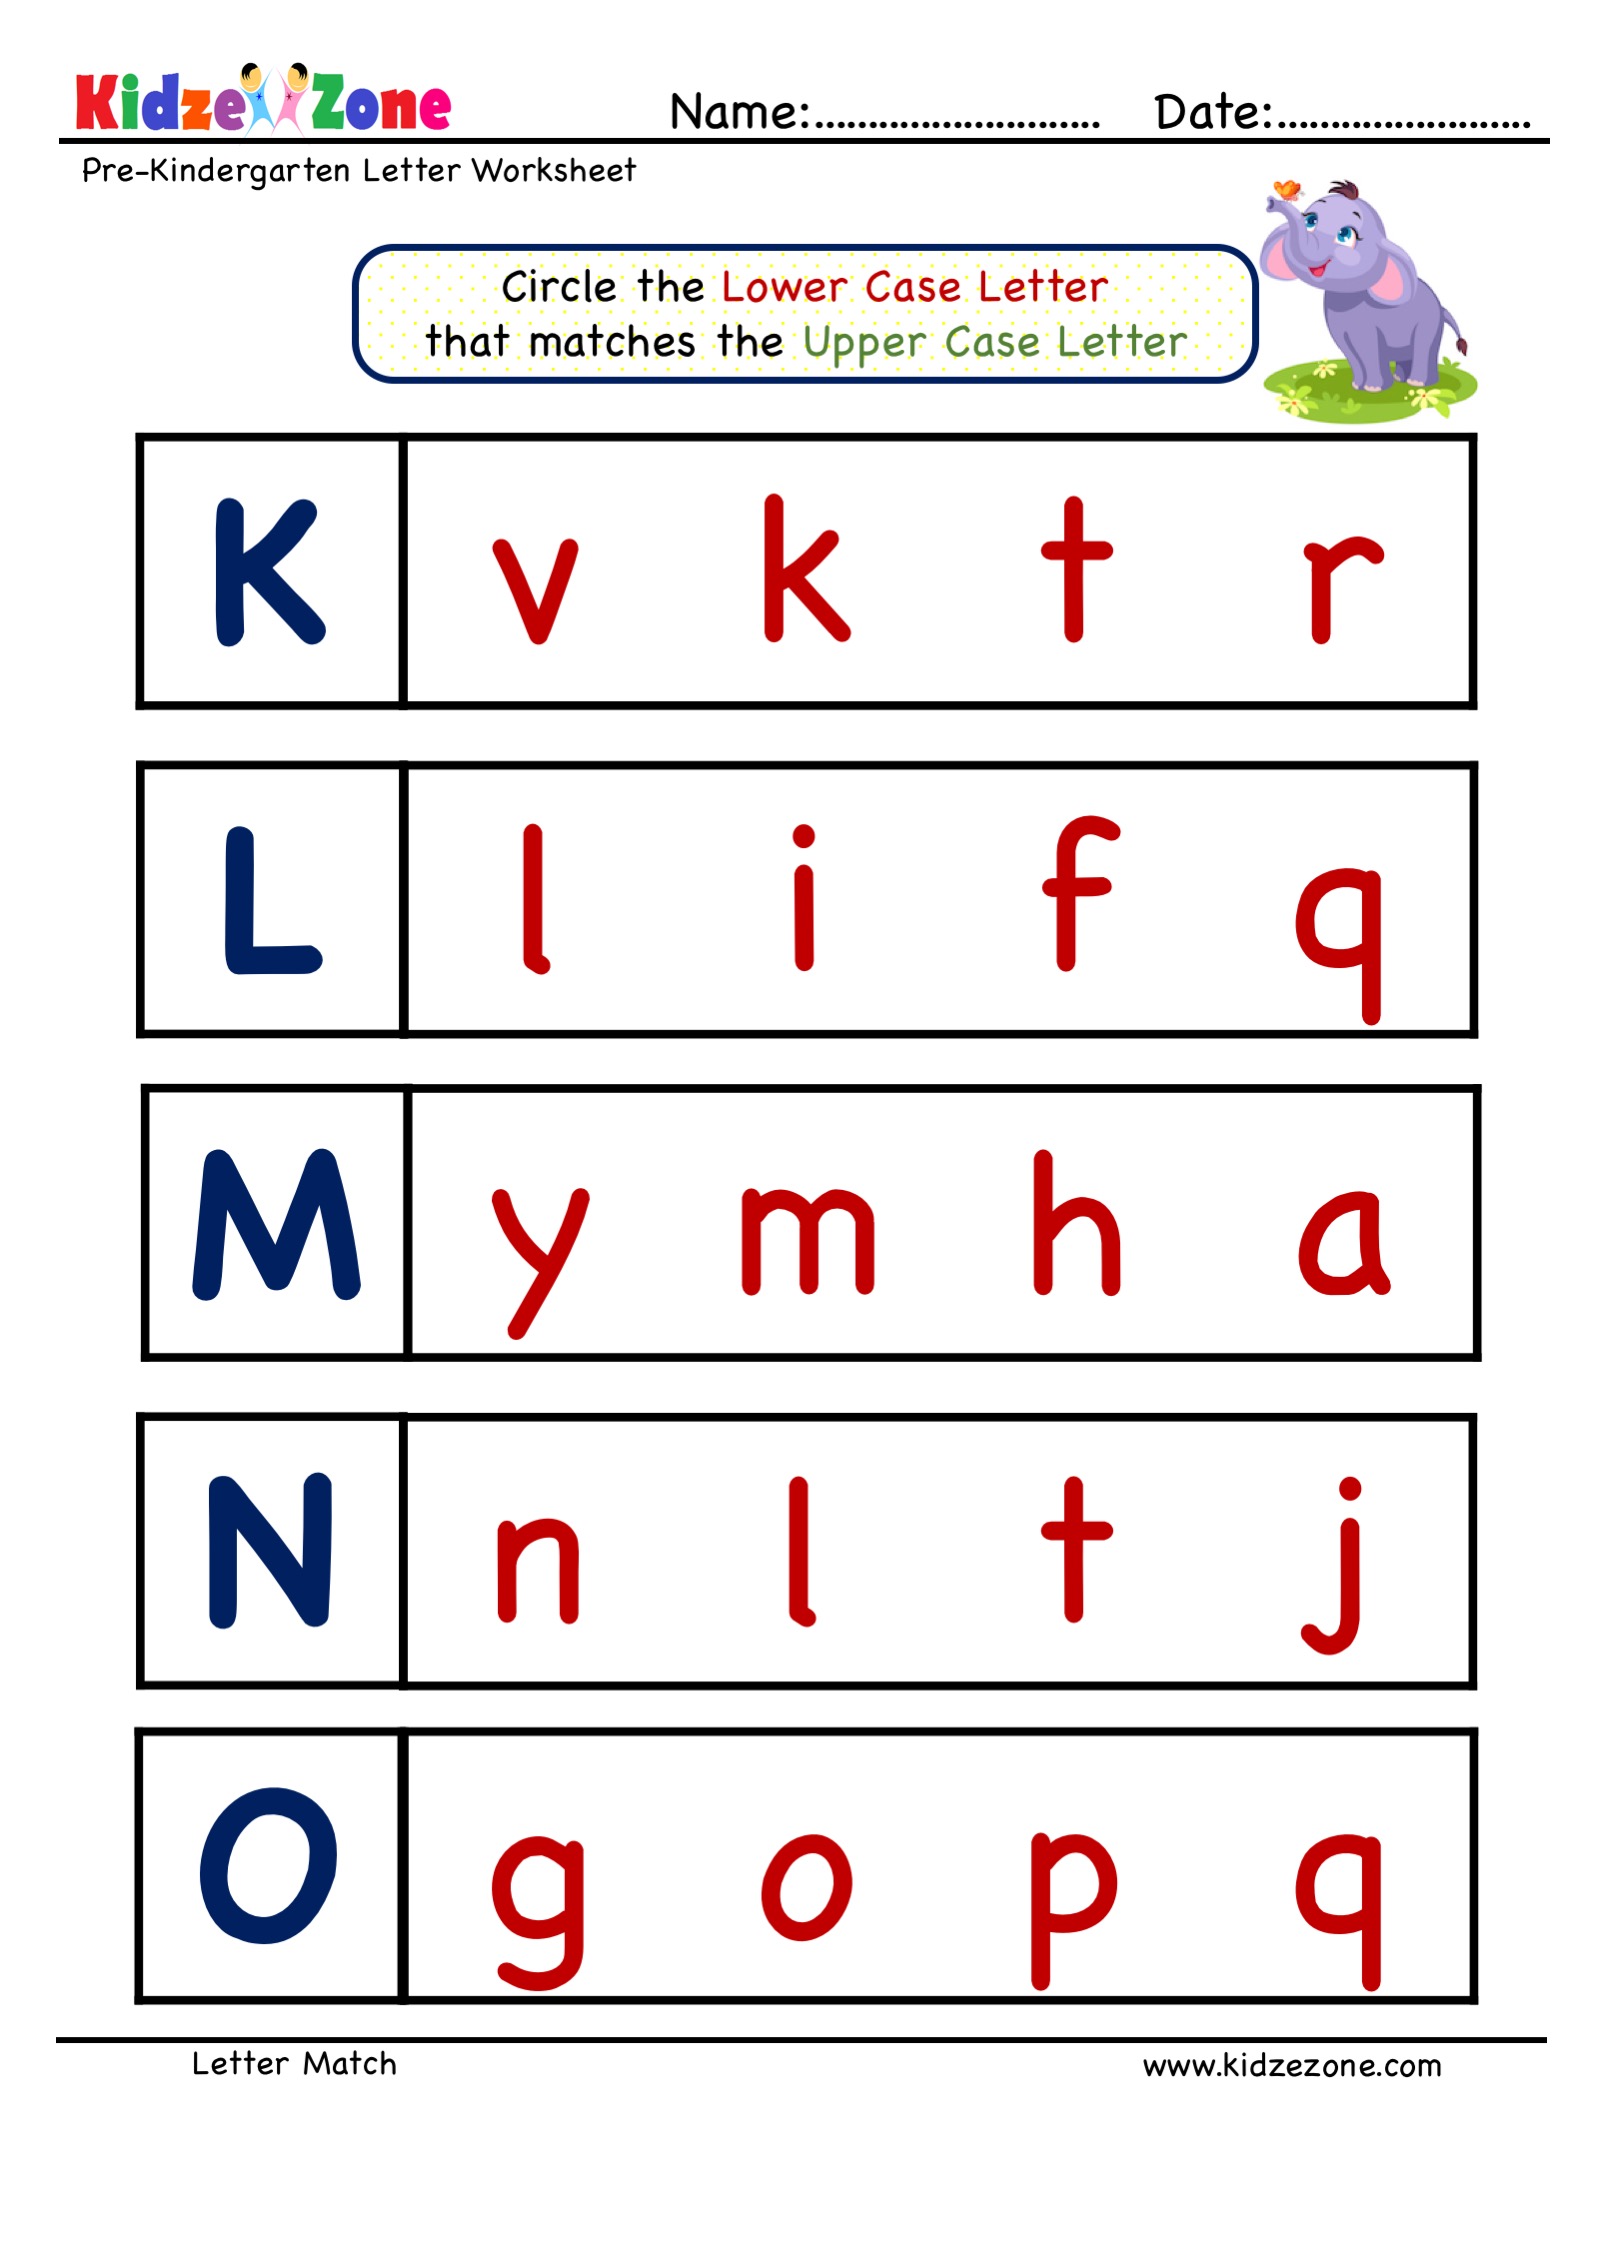 preschool-letter-matching-upper-case-to-lower-case-worksheet-2